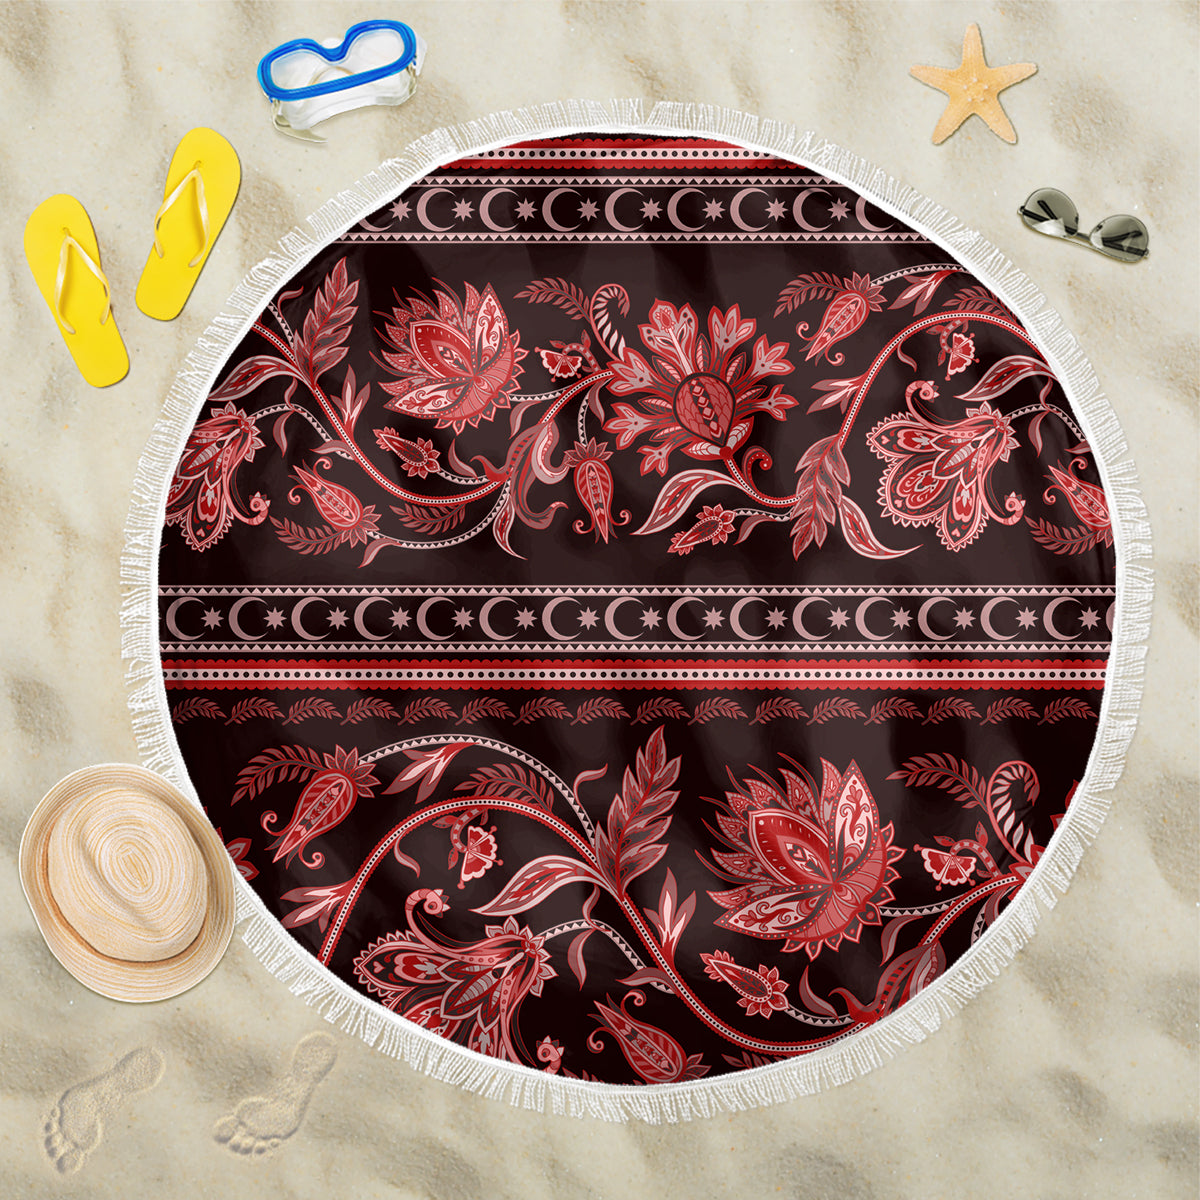 azerbaijan-beach-blanket-traditional-pattern-ornament-with-flowers-buta-red